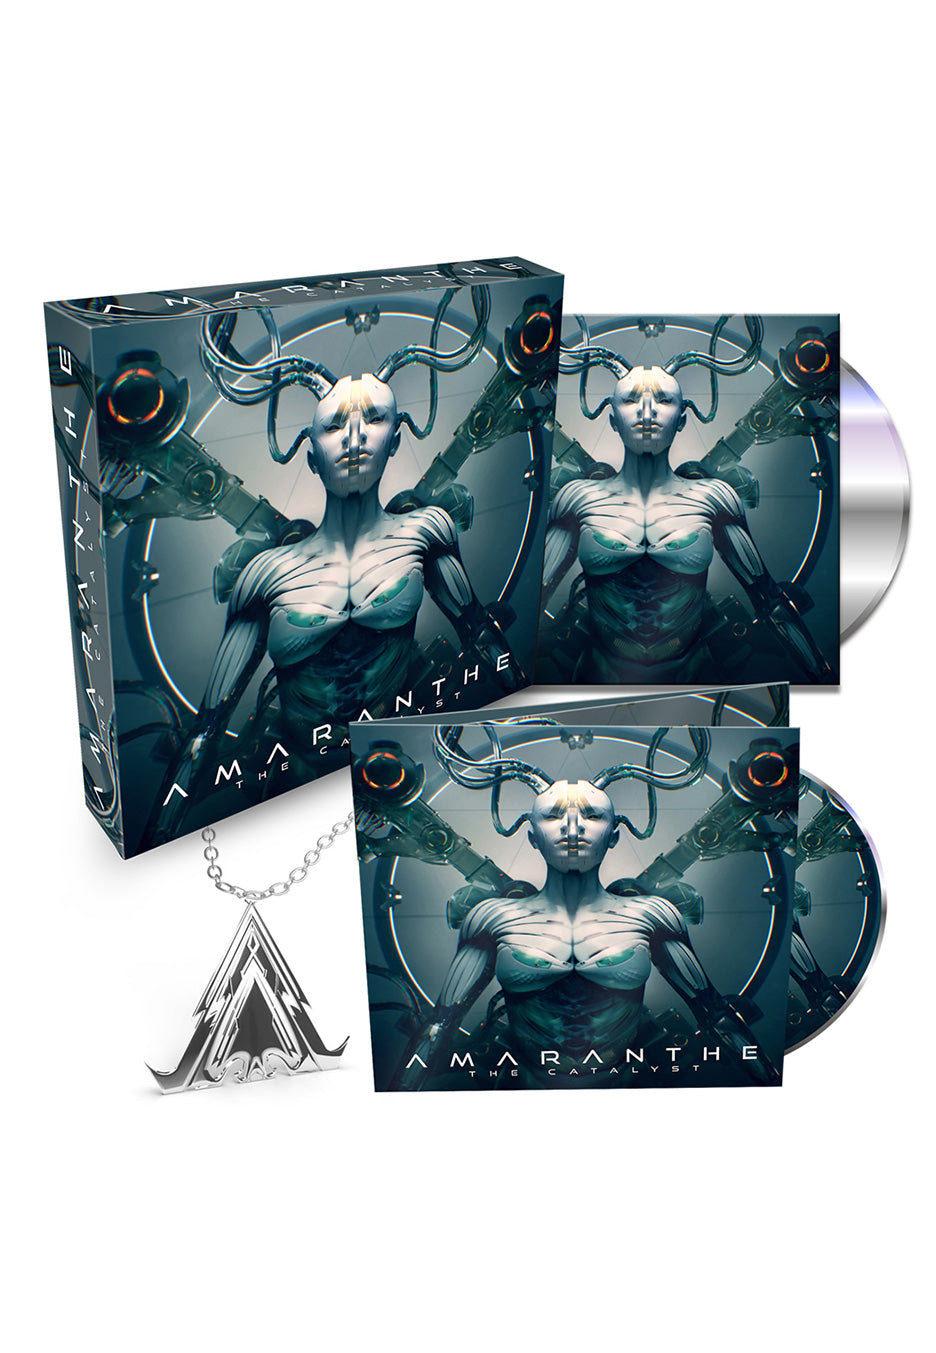 Amaranthe - The Catalyst Limited Edition - CD Boxset